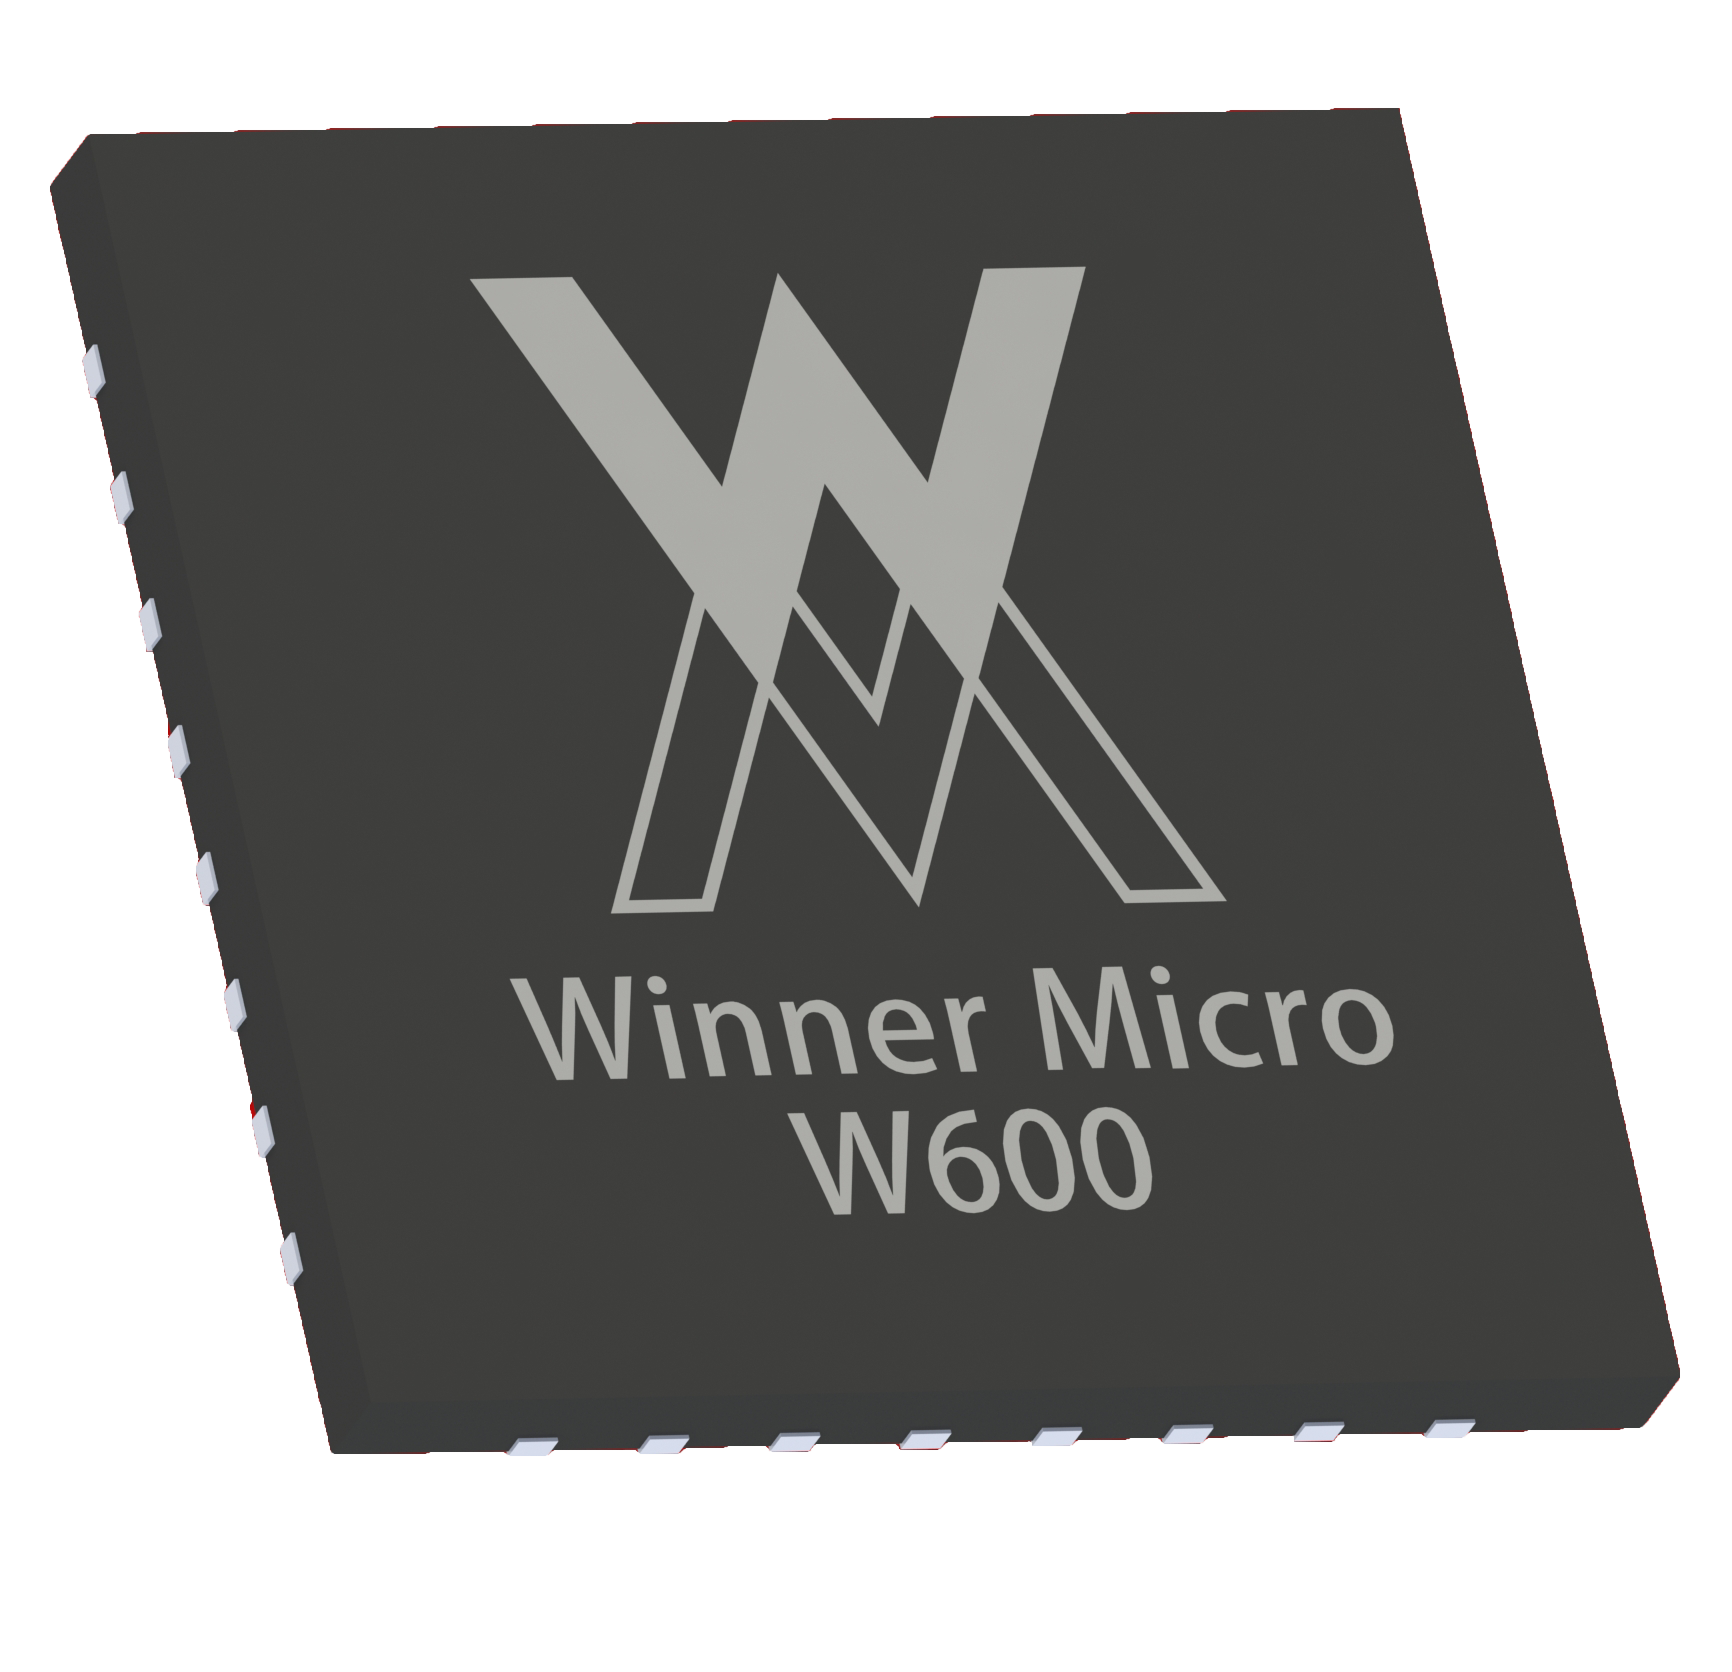  W600：IoT Wi-Fi SoC 芯片